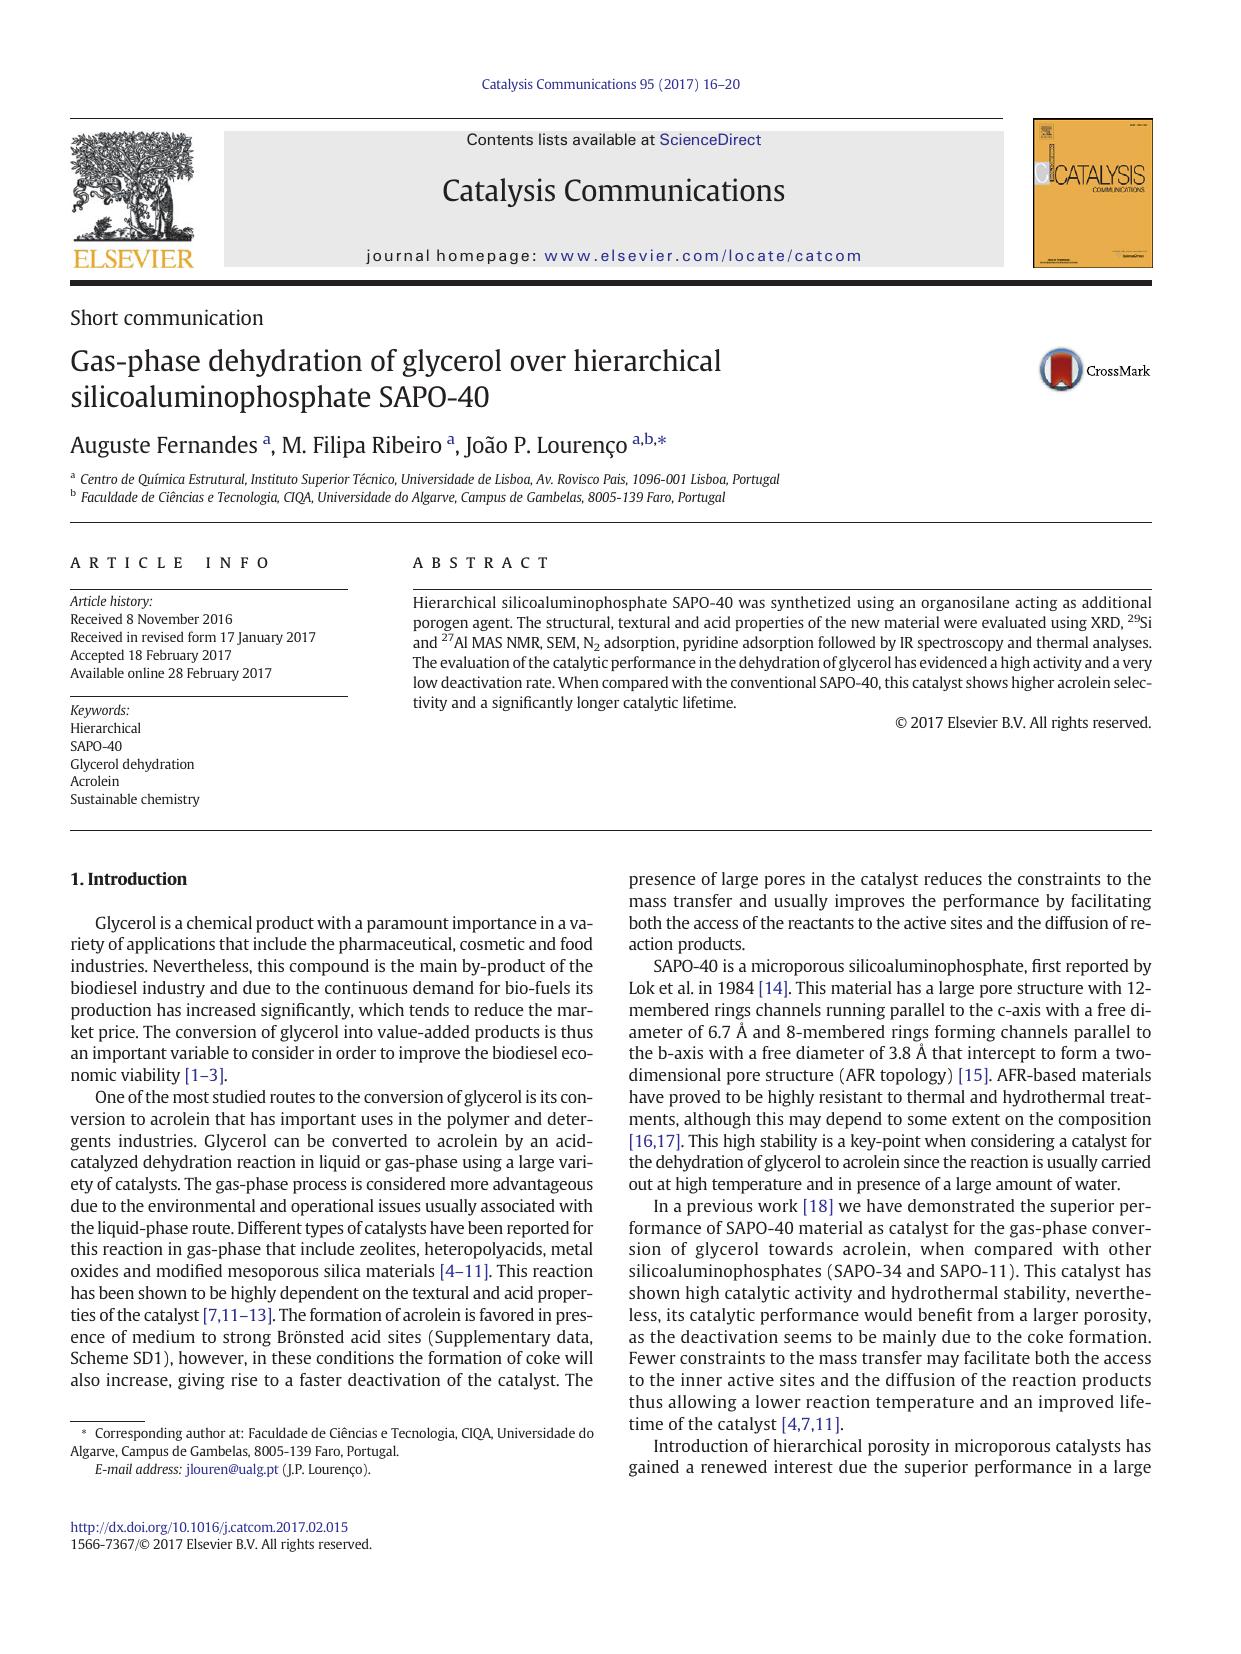 Gas-phase dehydration of glycerol over hierarchical silicoaluminophosphate SAPO-40 by Auguste Fernandes & M. Filipa Ribeiro & JoÃ£o P. LourenÃ§o